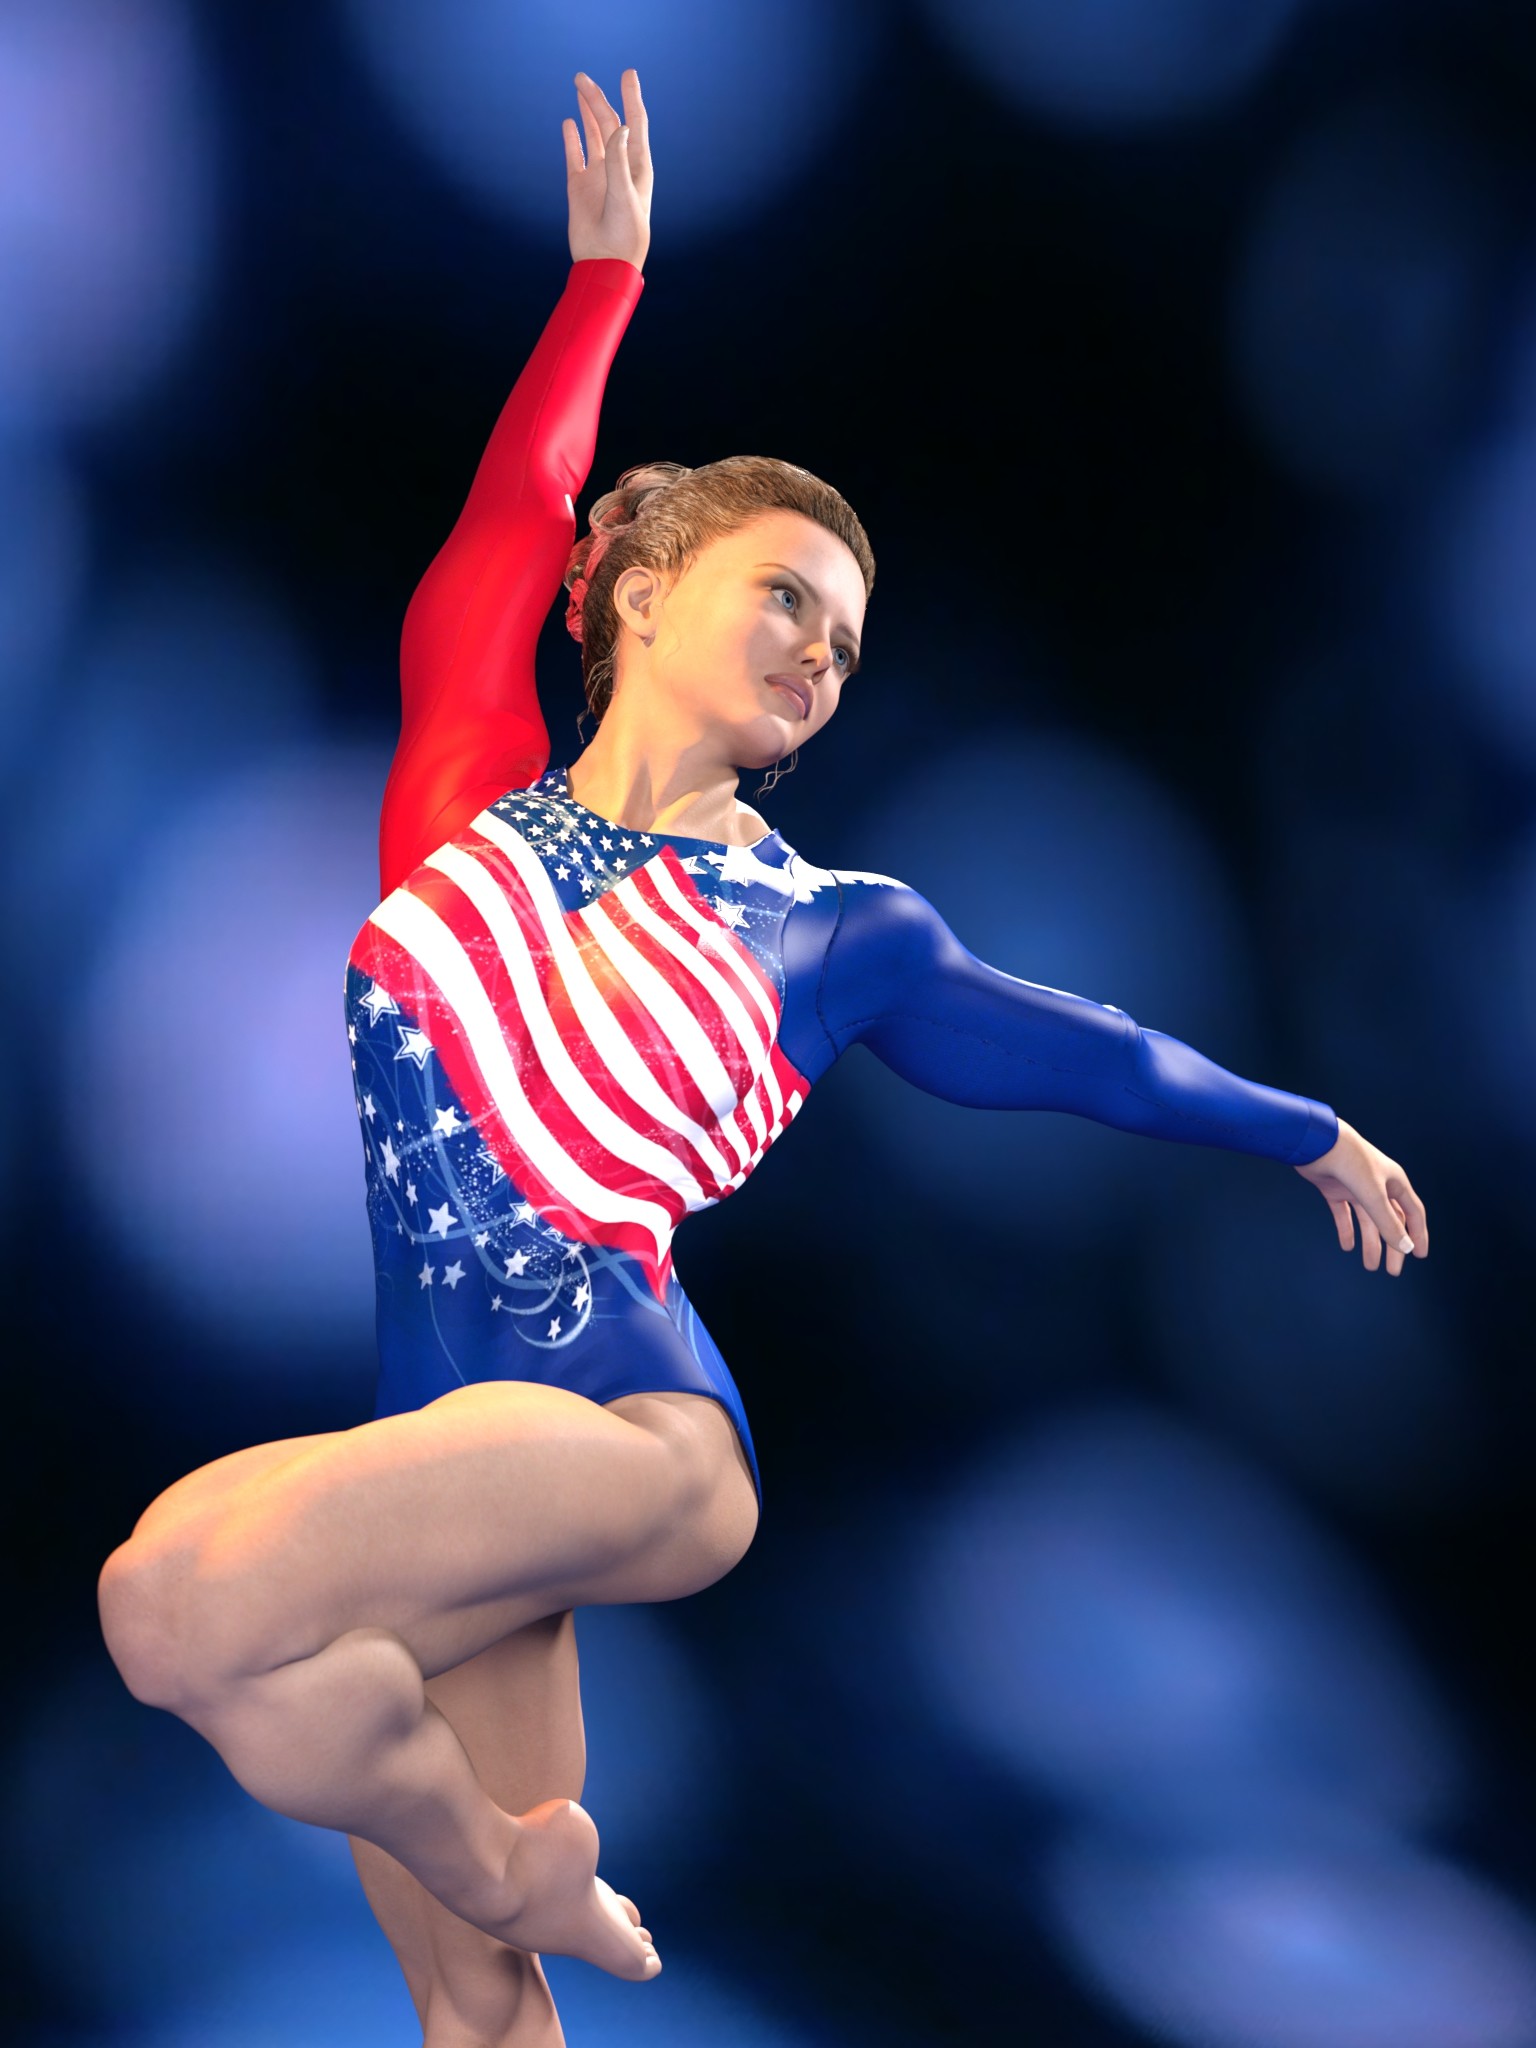 ArtStation - American Gymnast 2